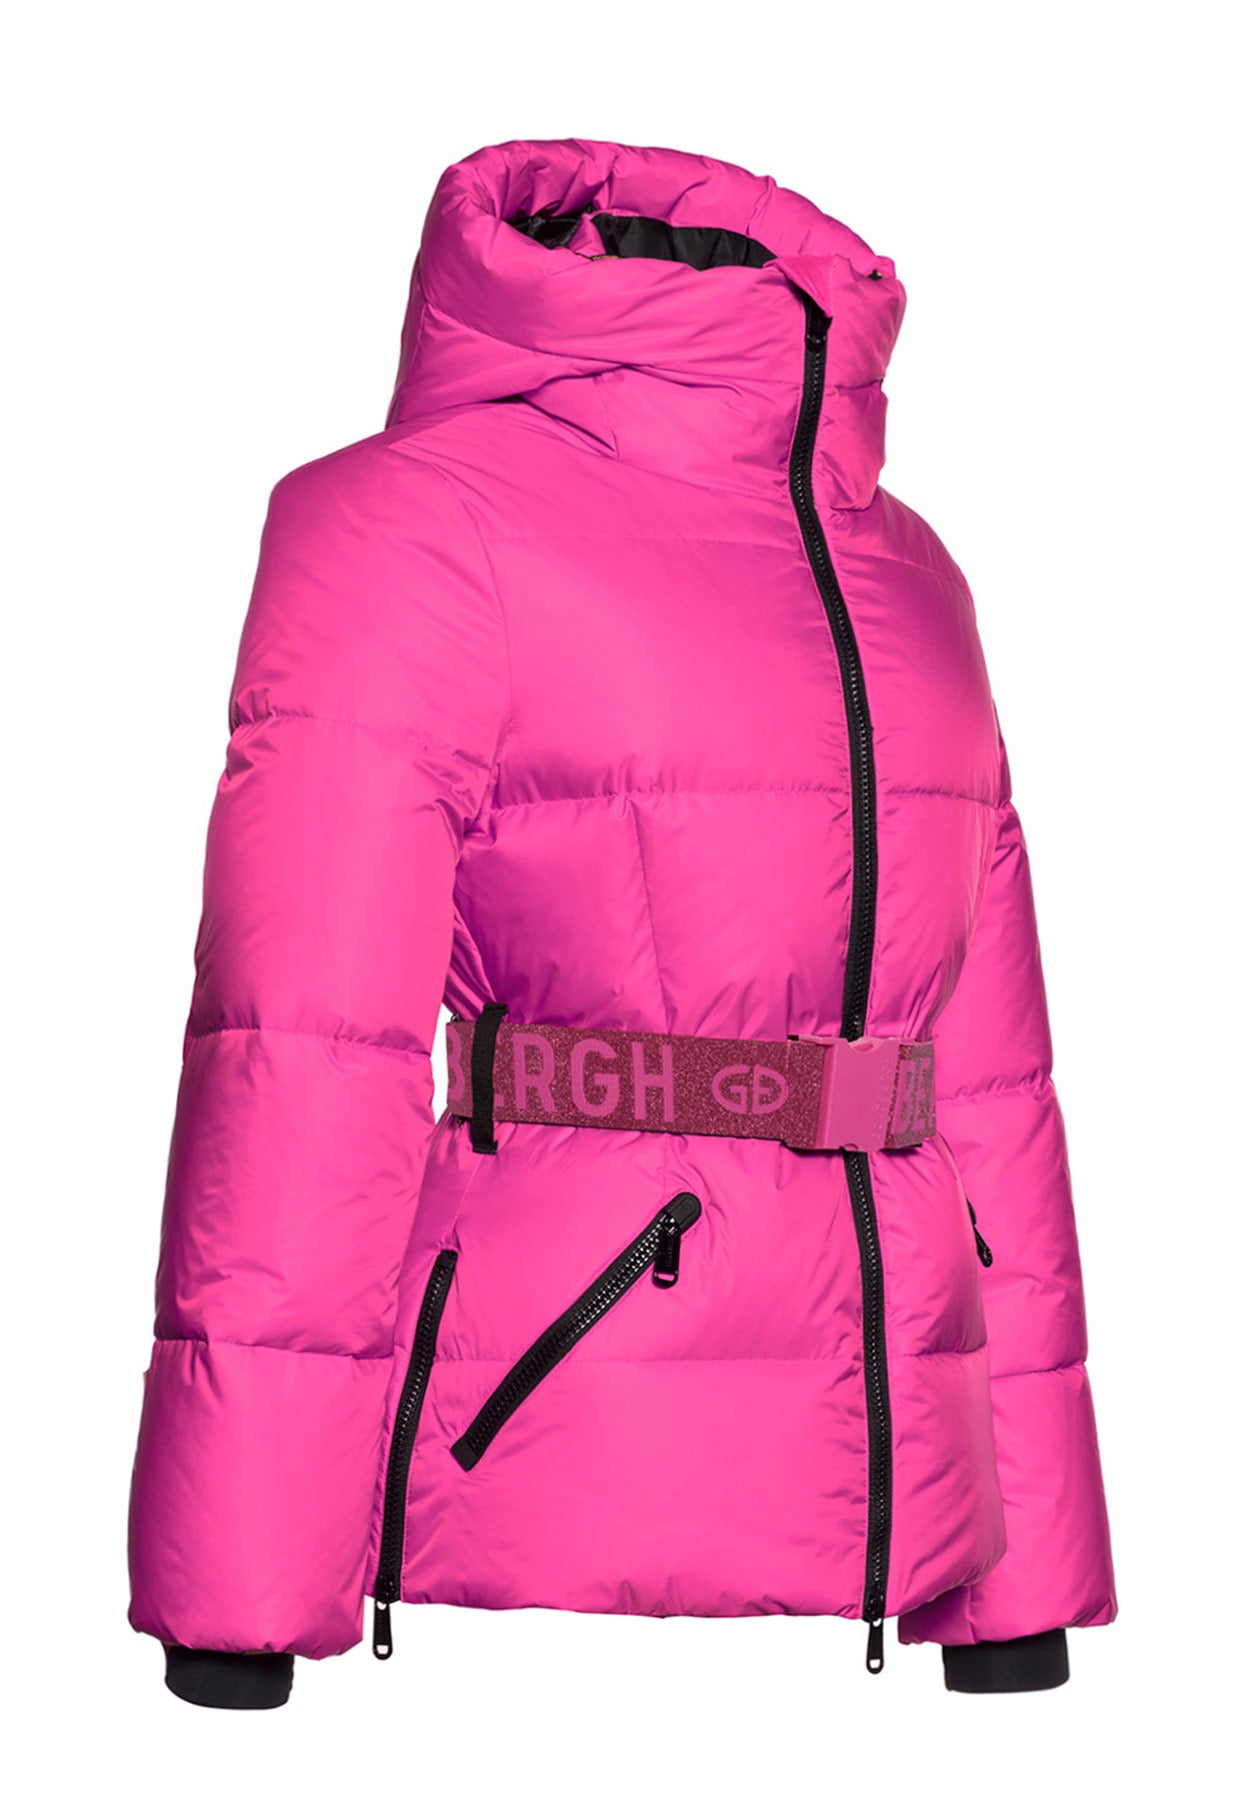 Goldbergh Snowmass Downfilled Ski Jacket in Pink